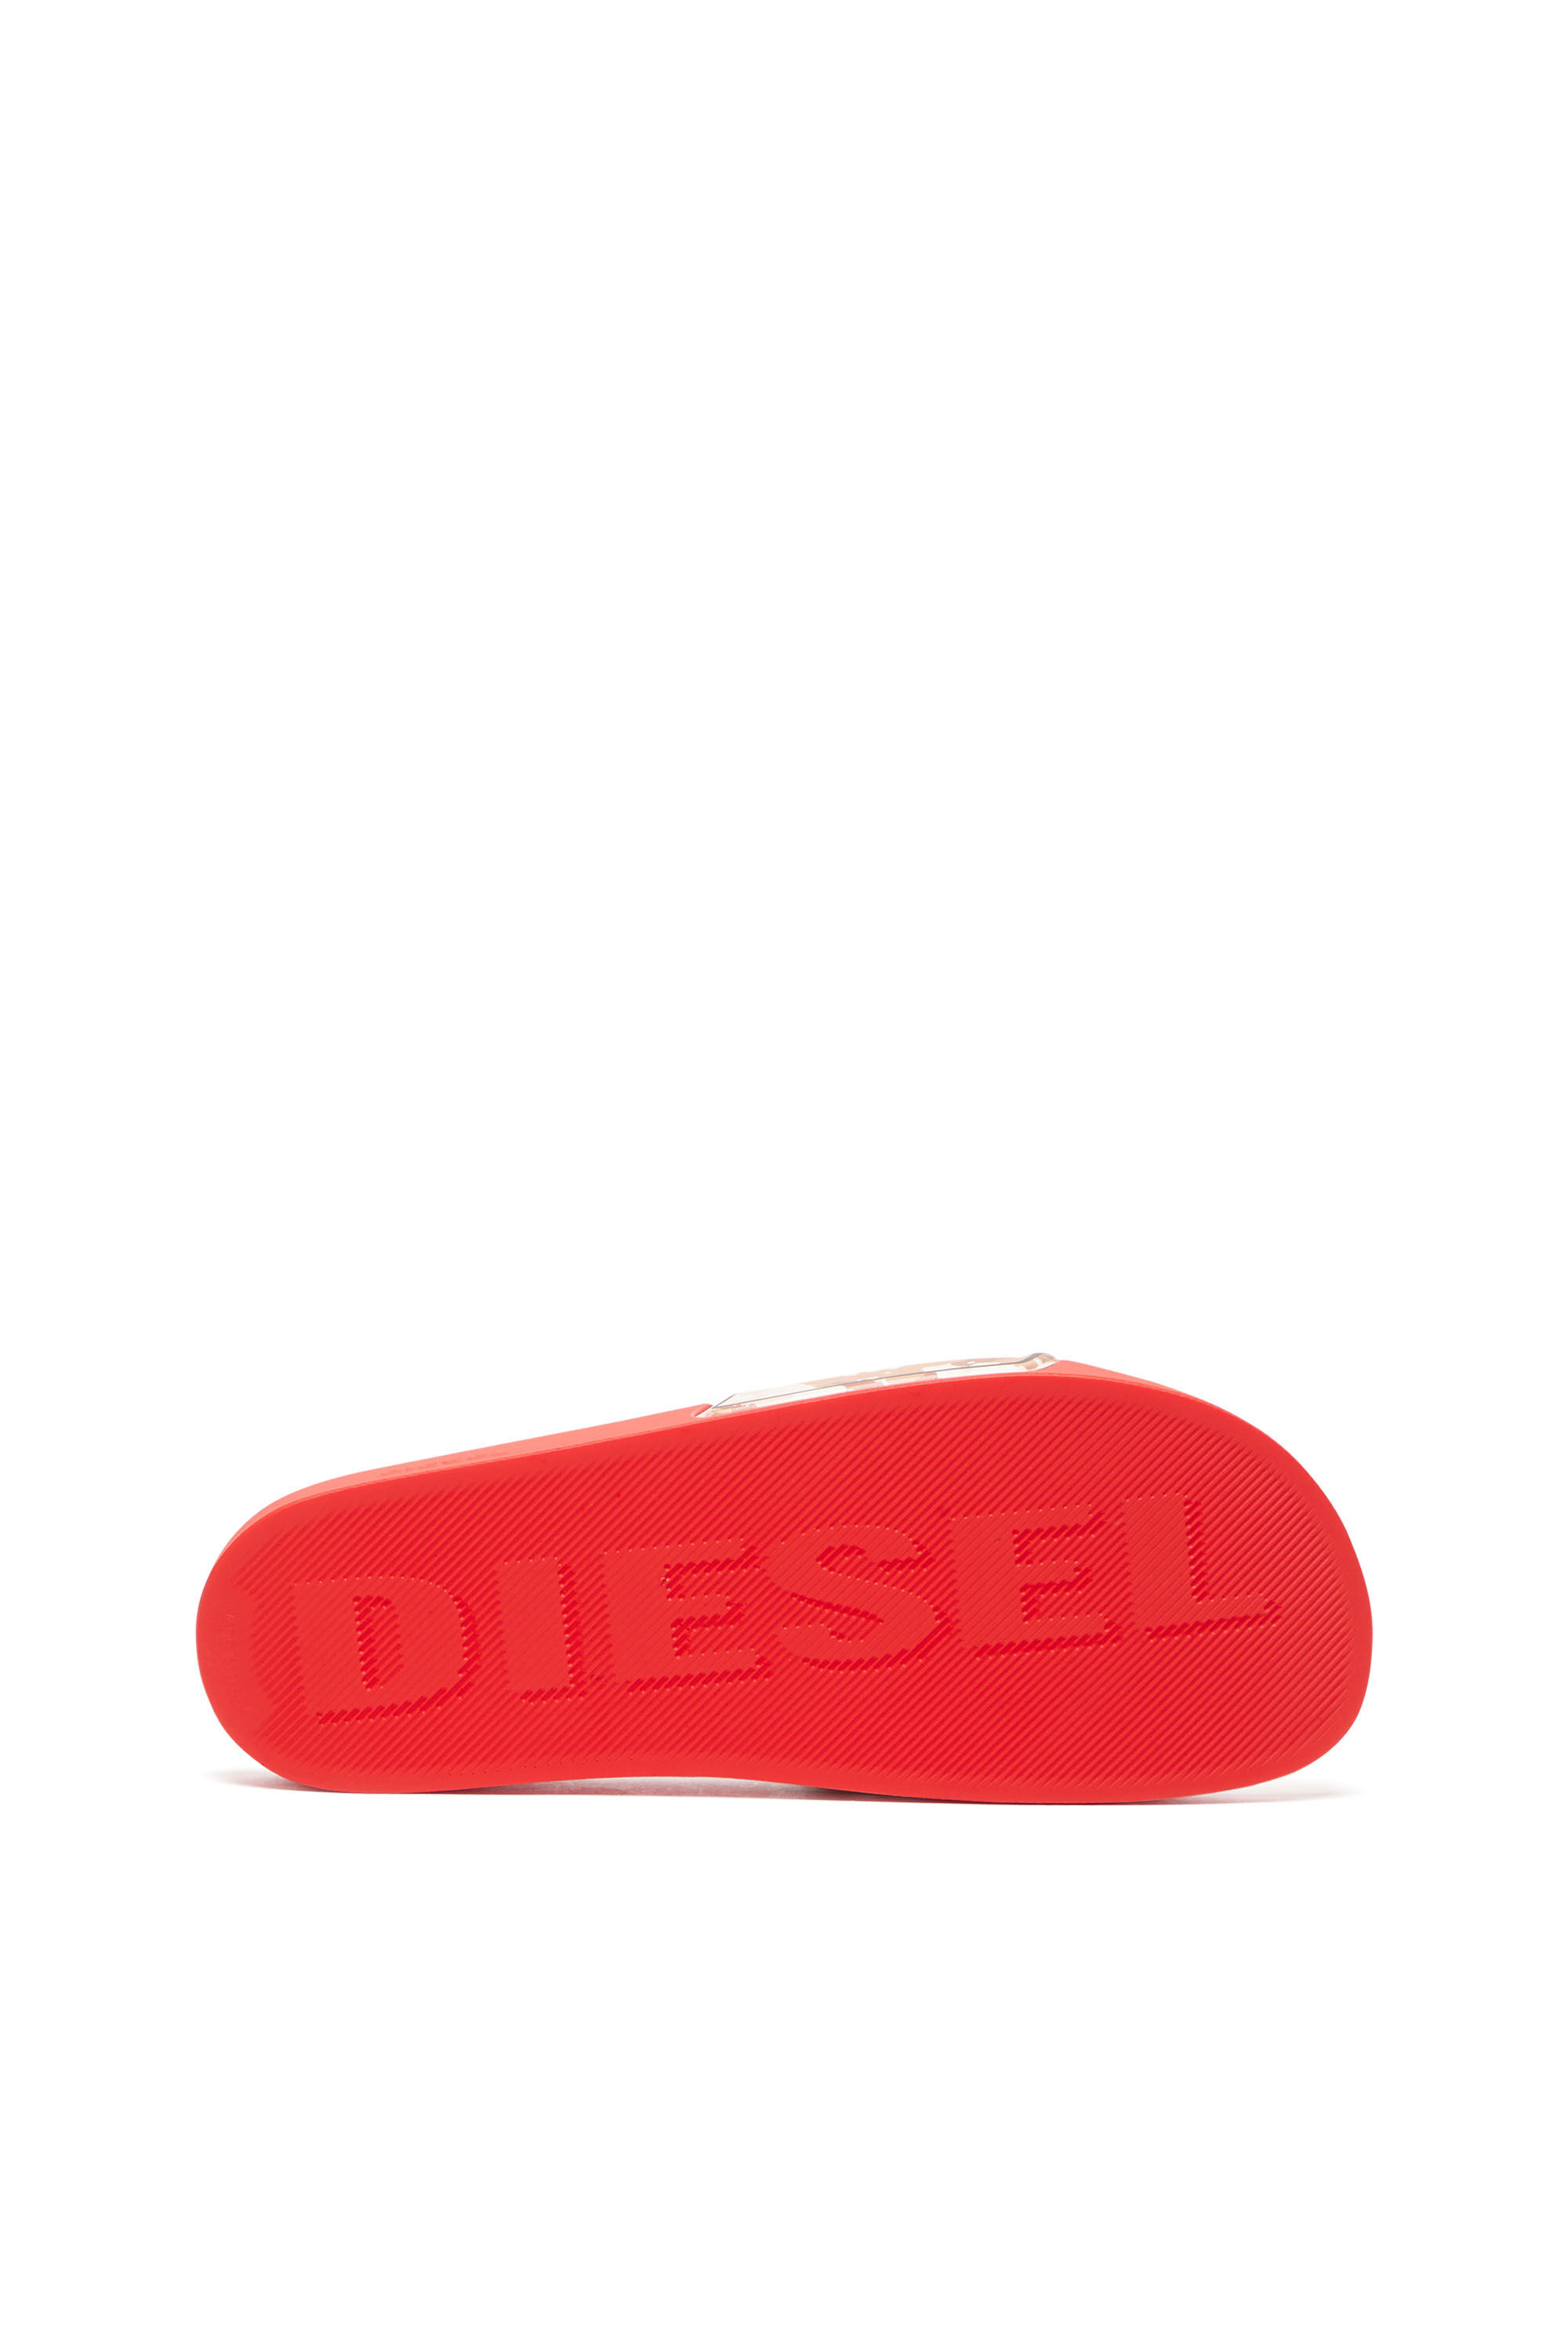 Diesel - SA-MAYEMI CC X, Unisex Sa-Mayemi CC X - Toboganes de piscina con banda de camuflaje in Rojo - Image 5